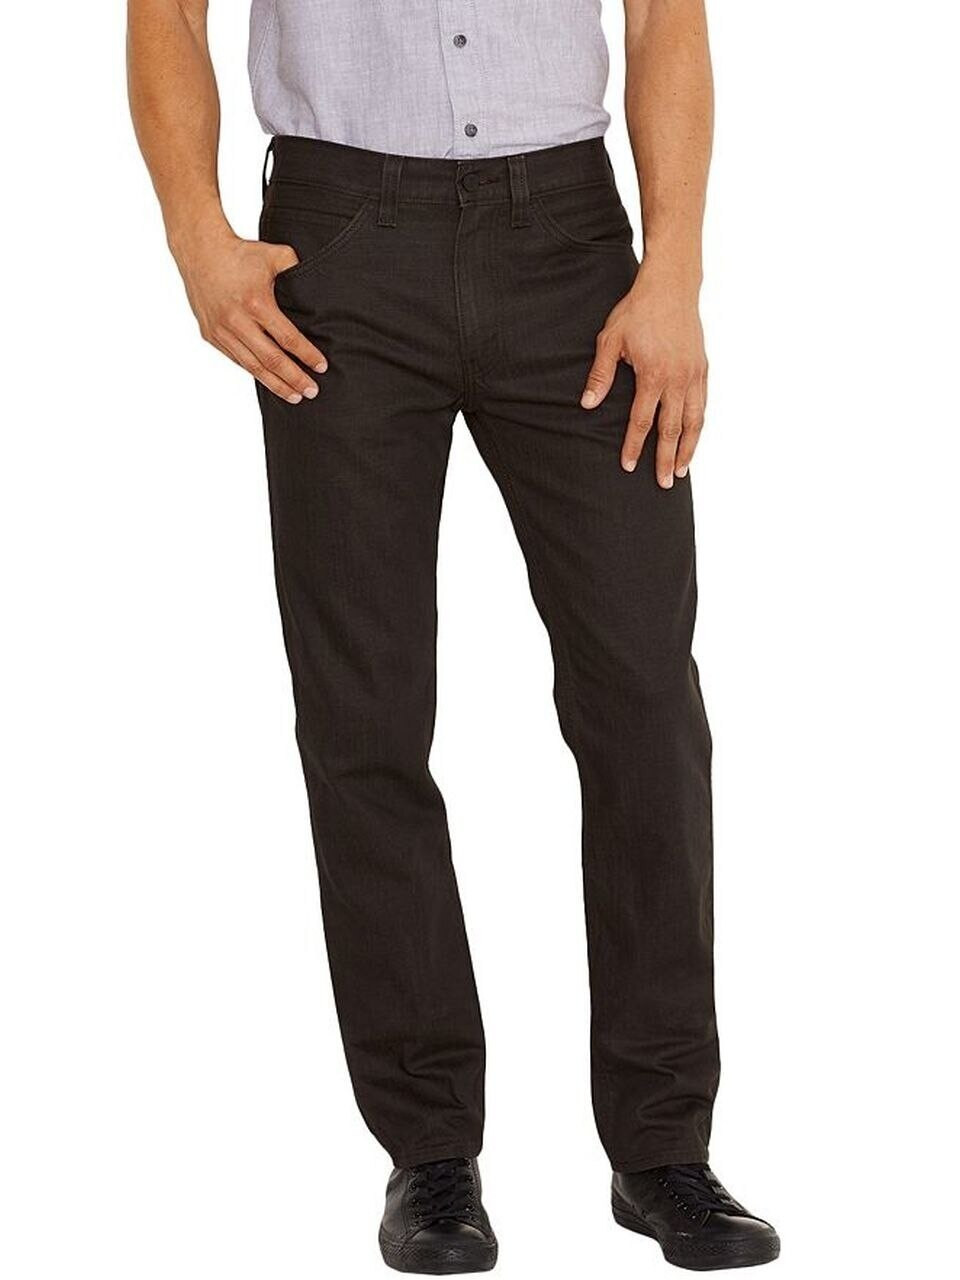 black bootcut jeans mens